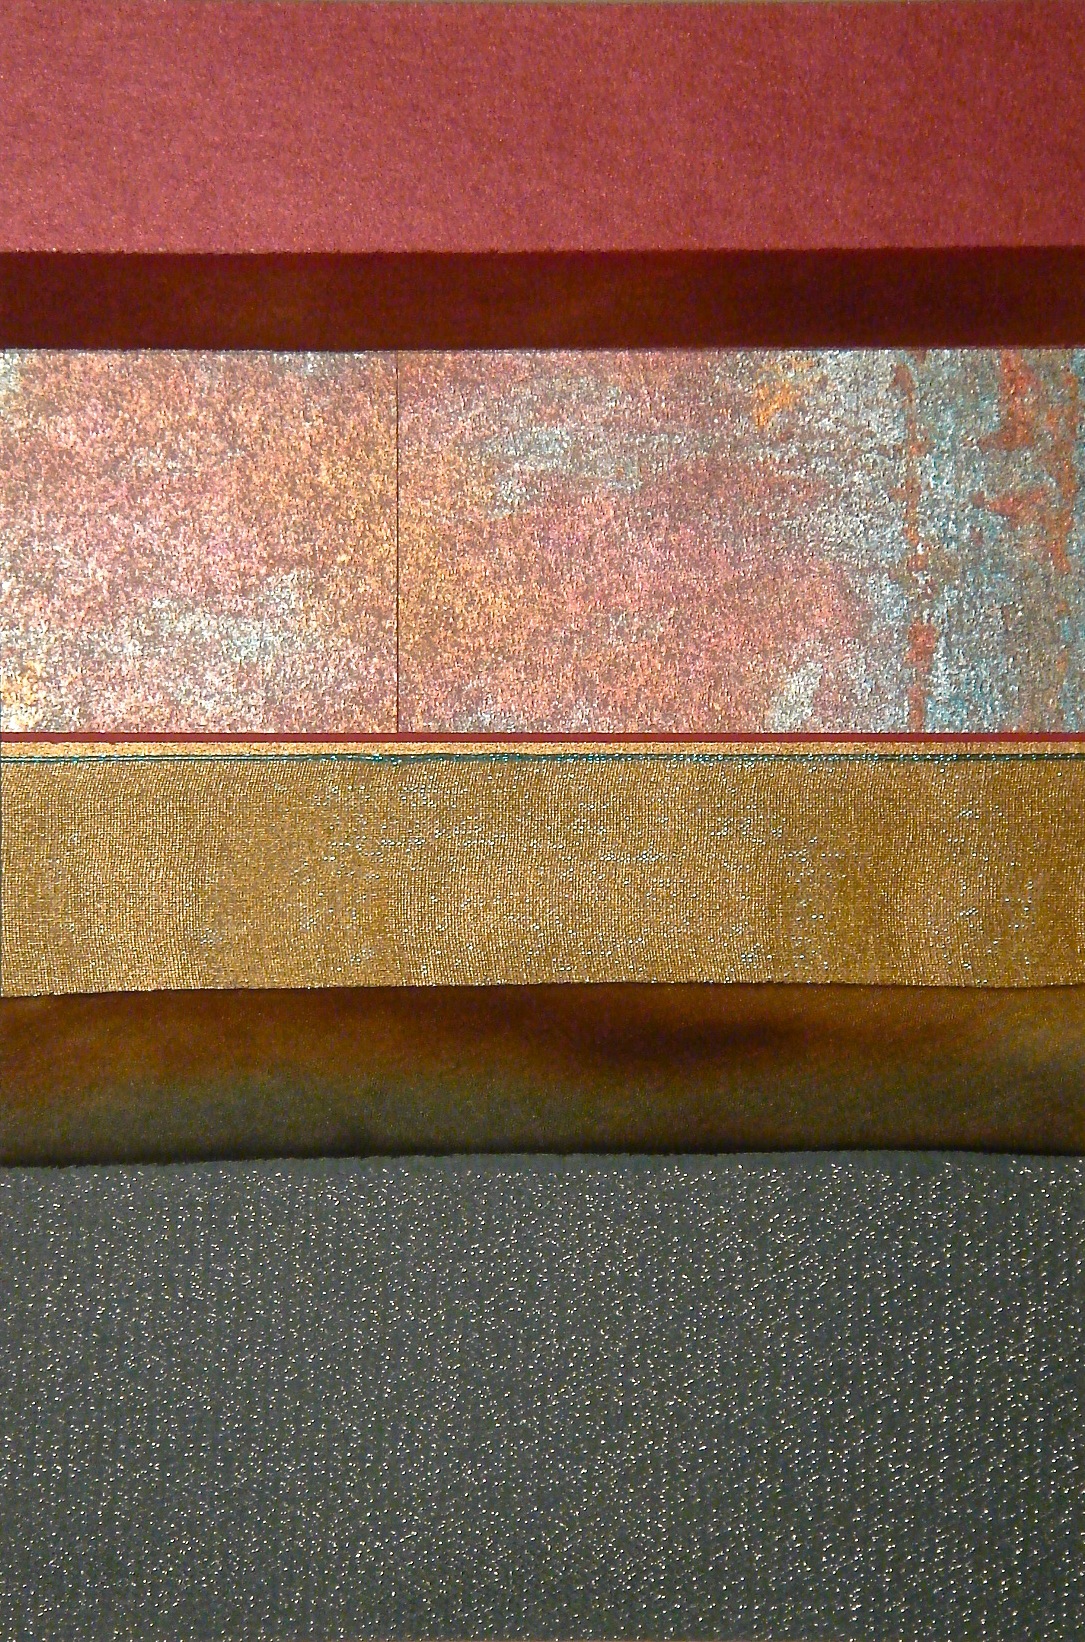   Metallic Series   12” x 16”  Paper and Silks  2006 